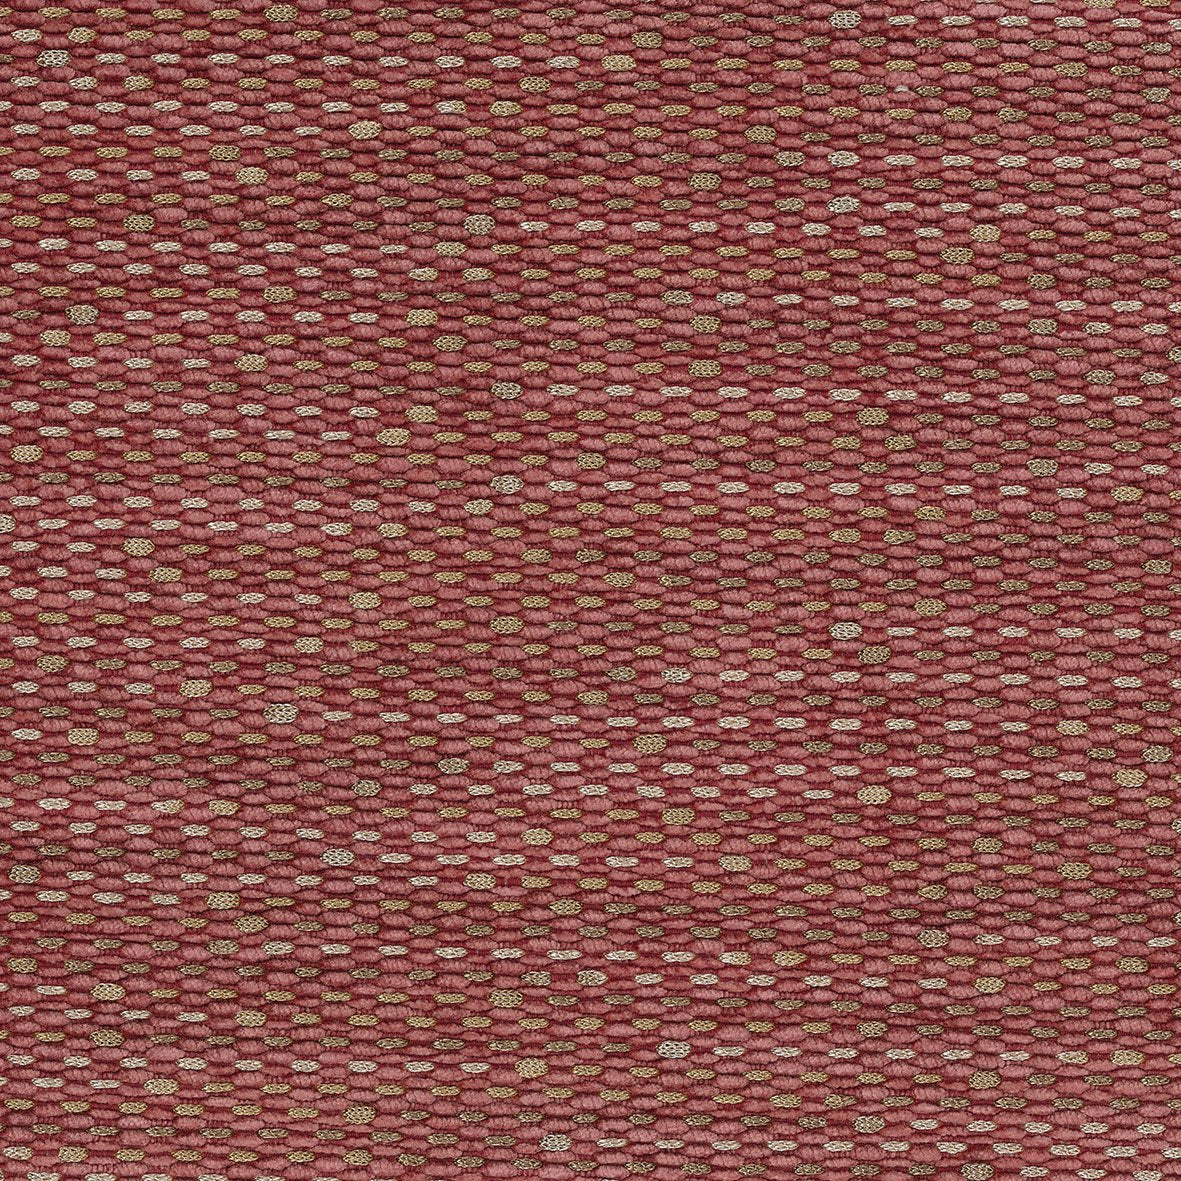 Nina Campbell Fabric - Poquelin Tartuffe Soft Red/Beige NCF4311-01